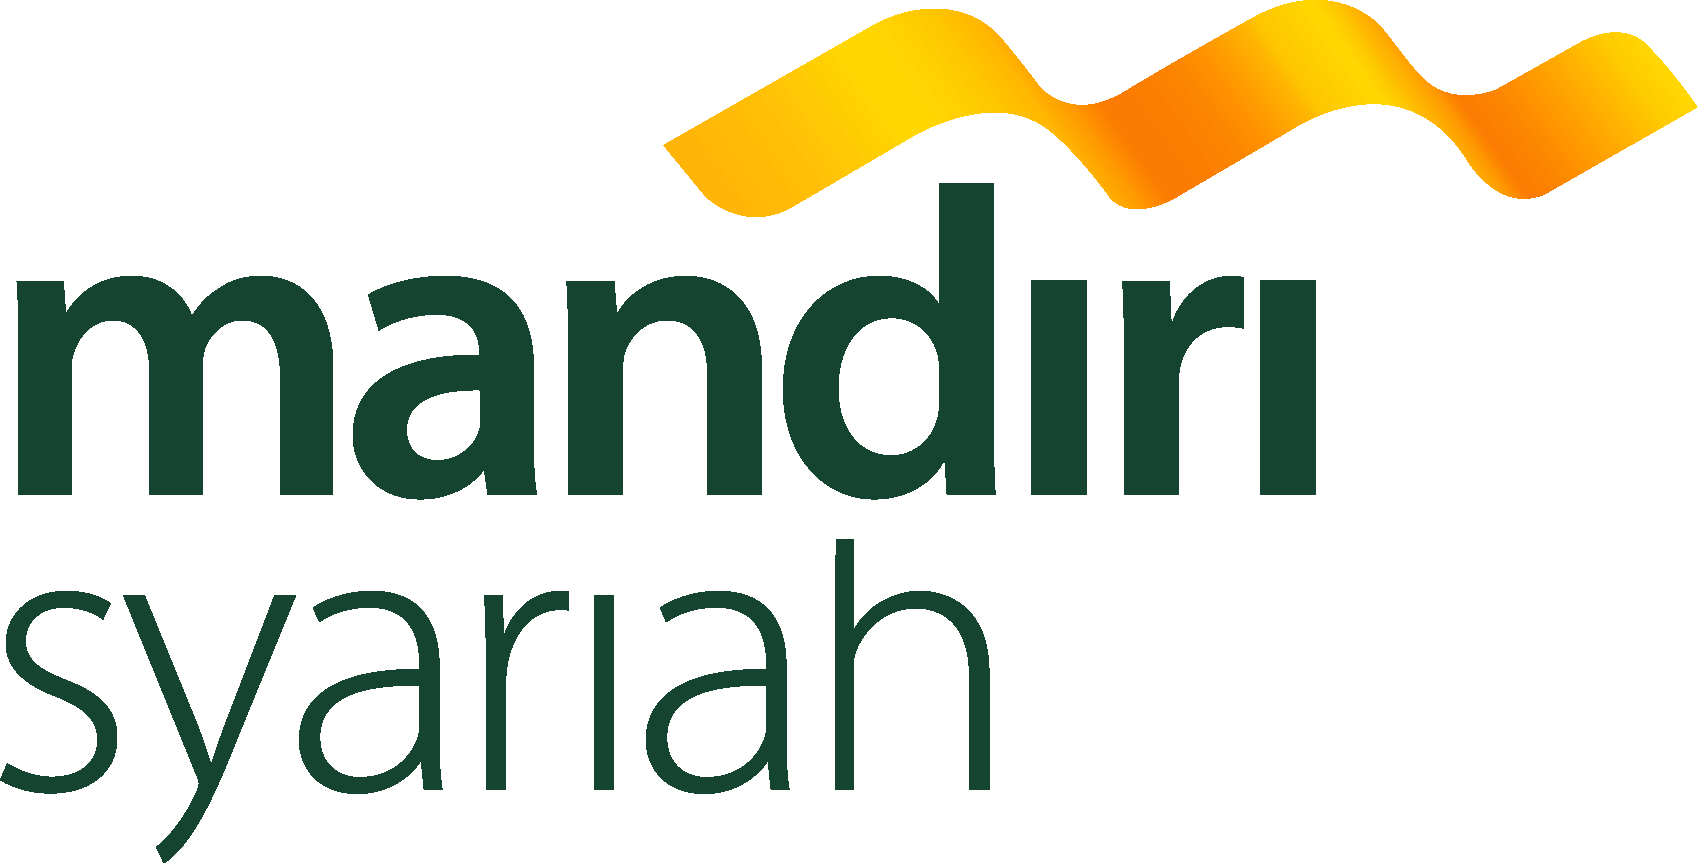 Mandiri Bank. Taspen. Bank Mandiri Indonesia. Bank logo. Банки логотипы png